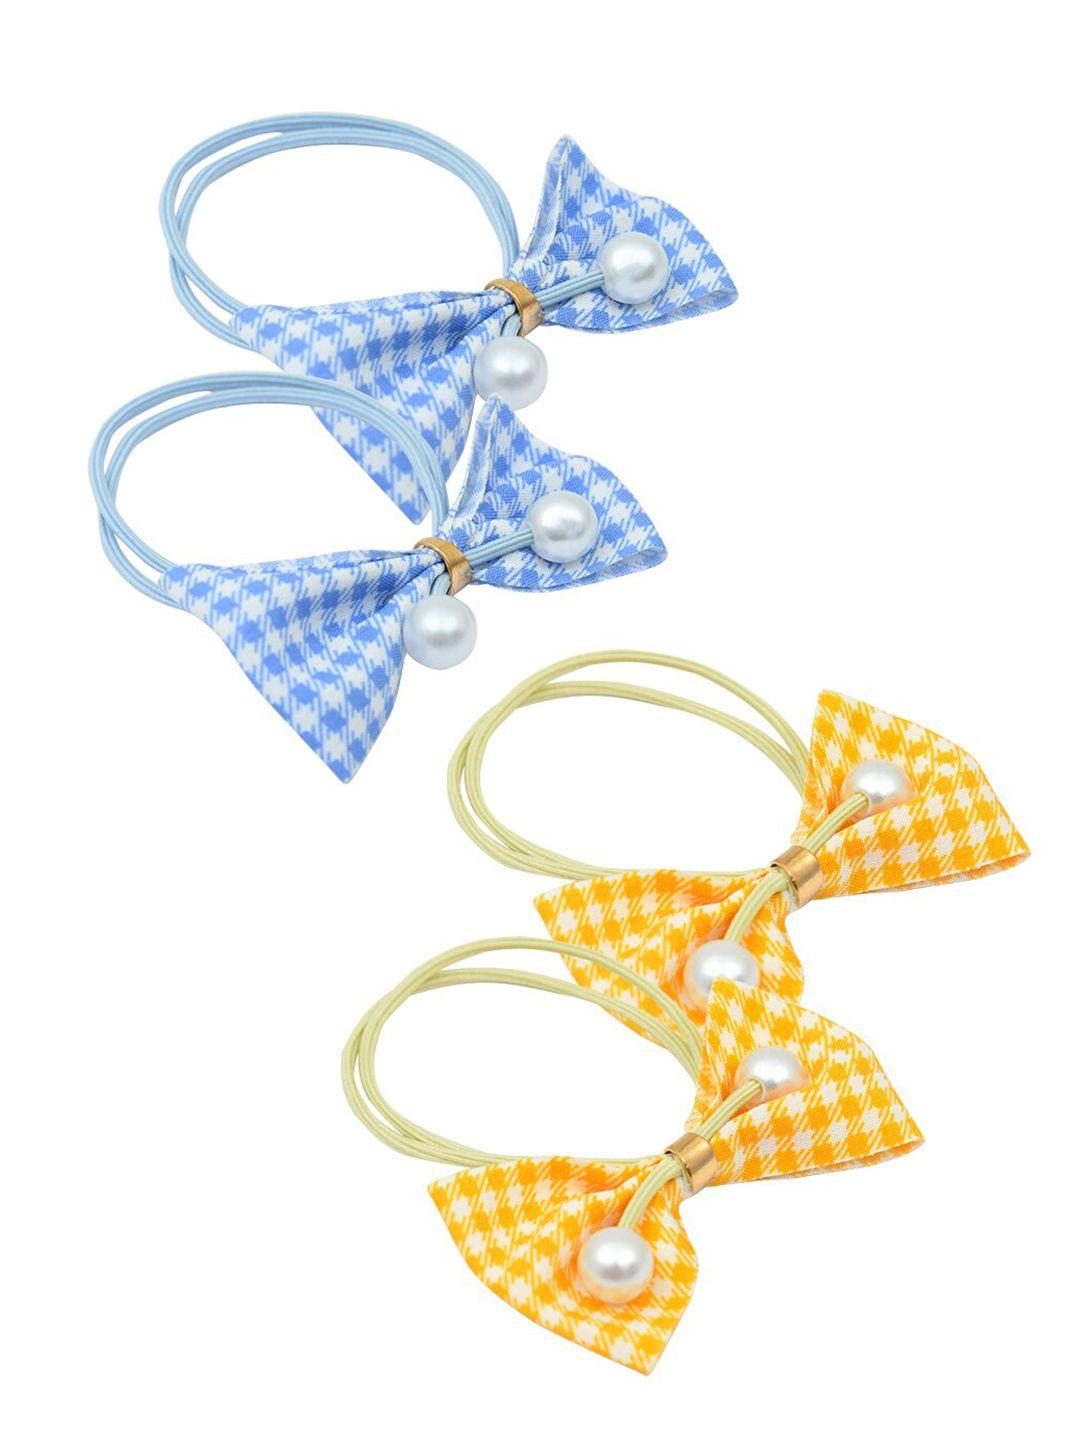 funkrafts girls yellow & blue set of 4 ponytail holders